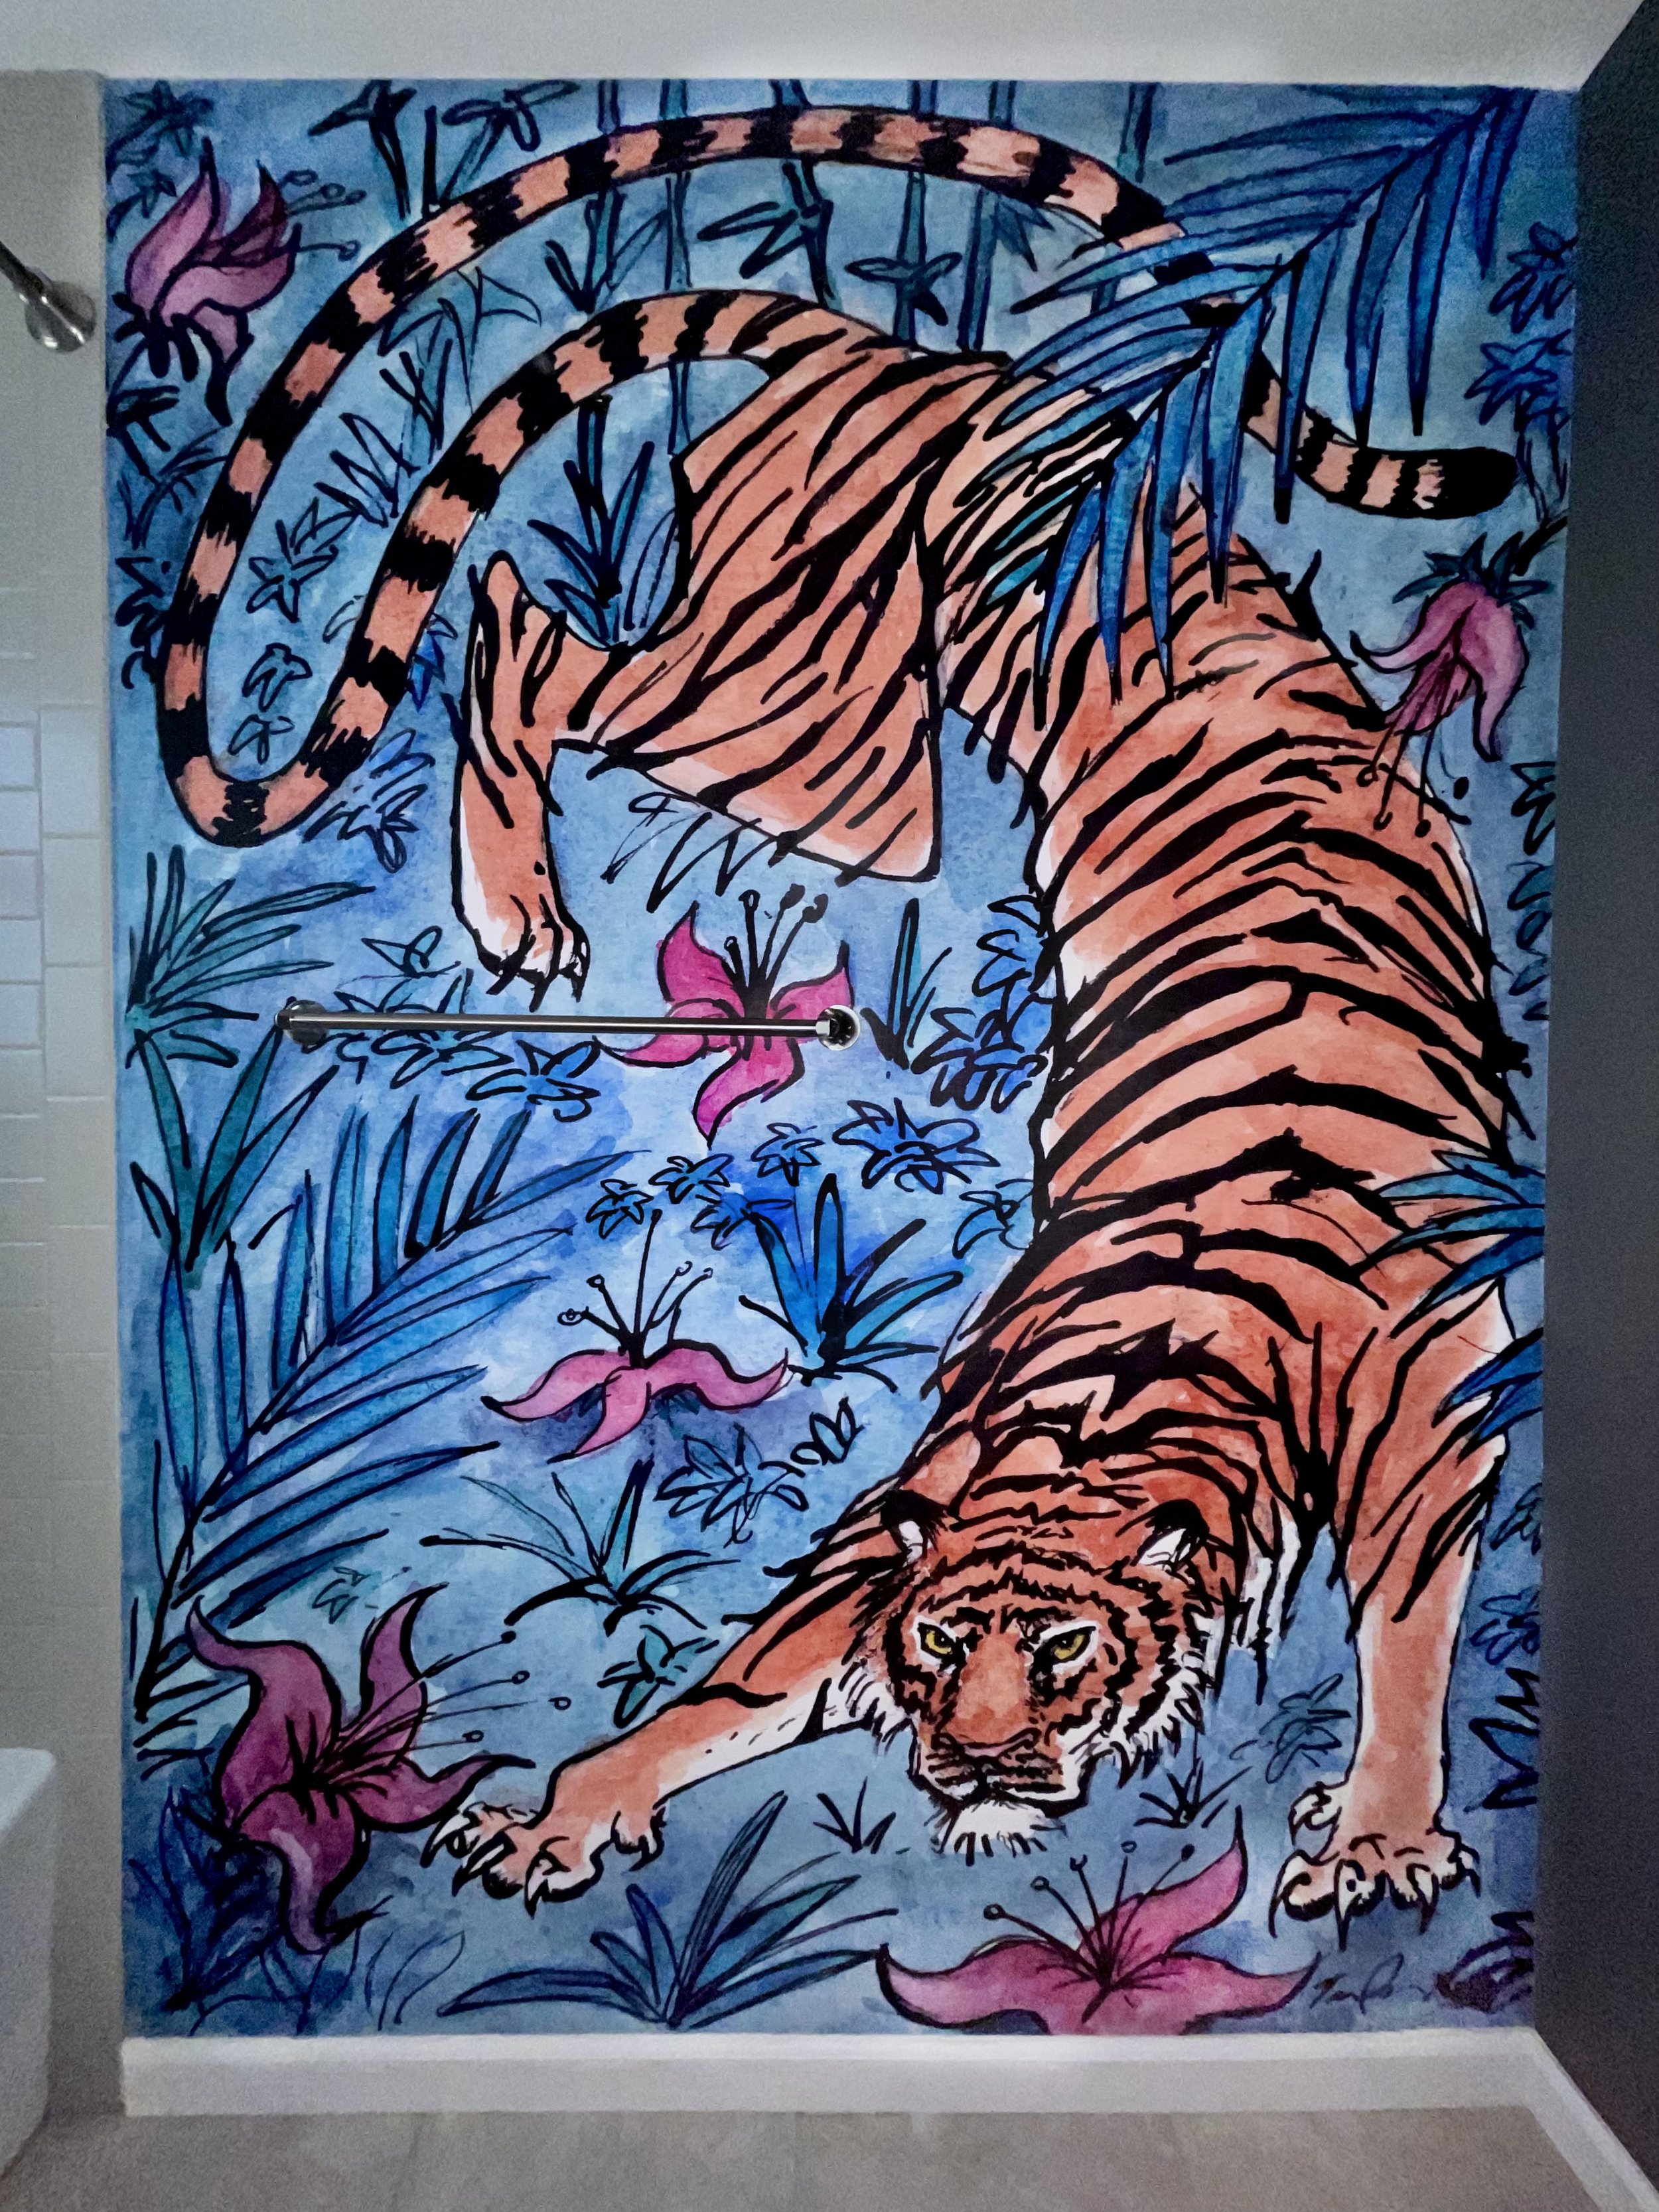 Tiger mural photo.jpg